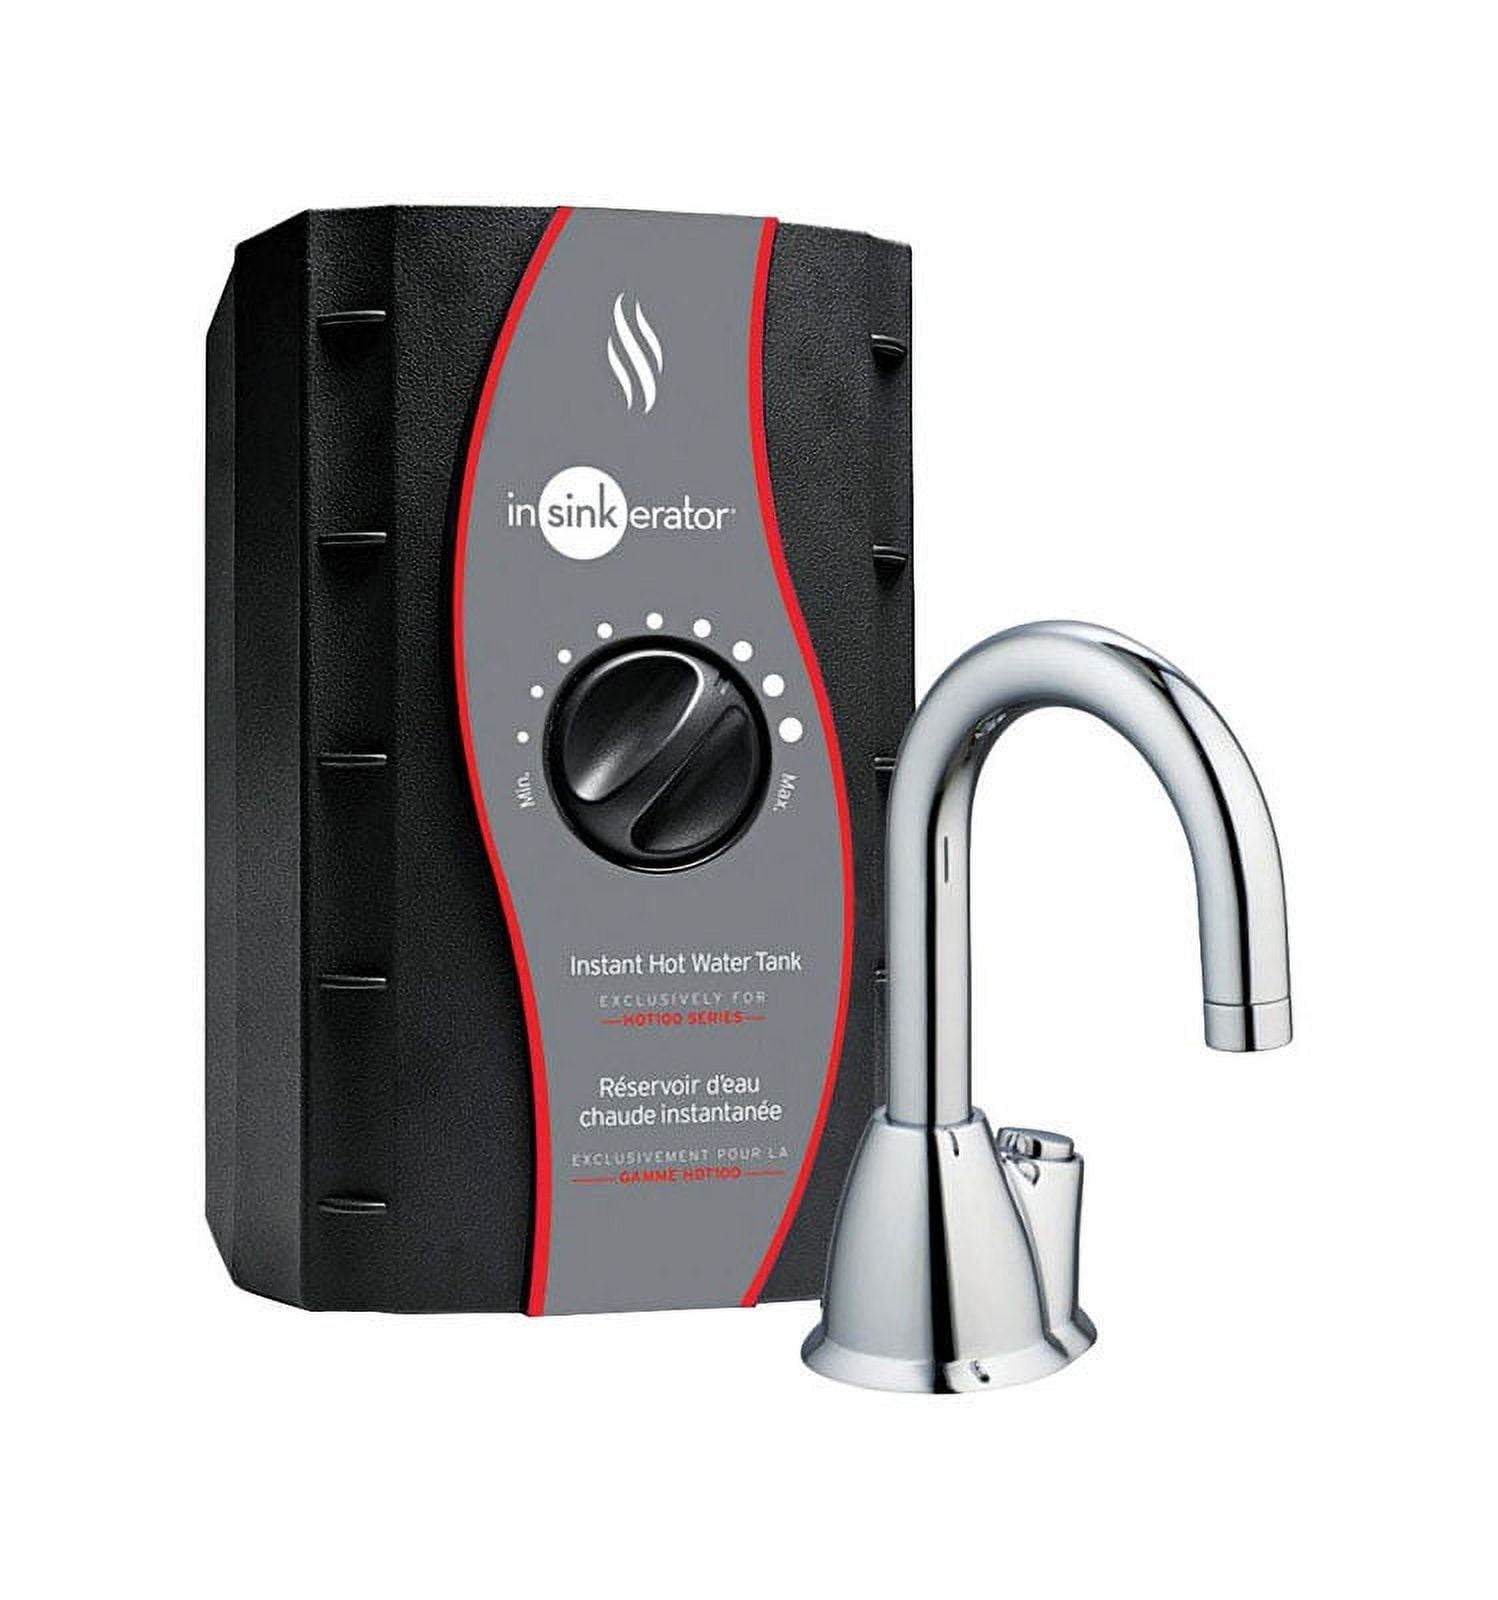 Brentwood 3.3 Liter Electric Hot Water Dispenser Stainless Steel 3.49 quart  13 x 8.8 x 11.5 - Office Depot